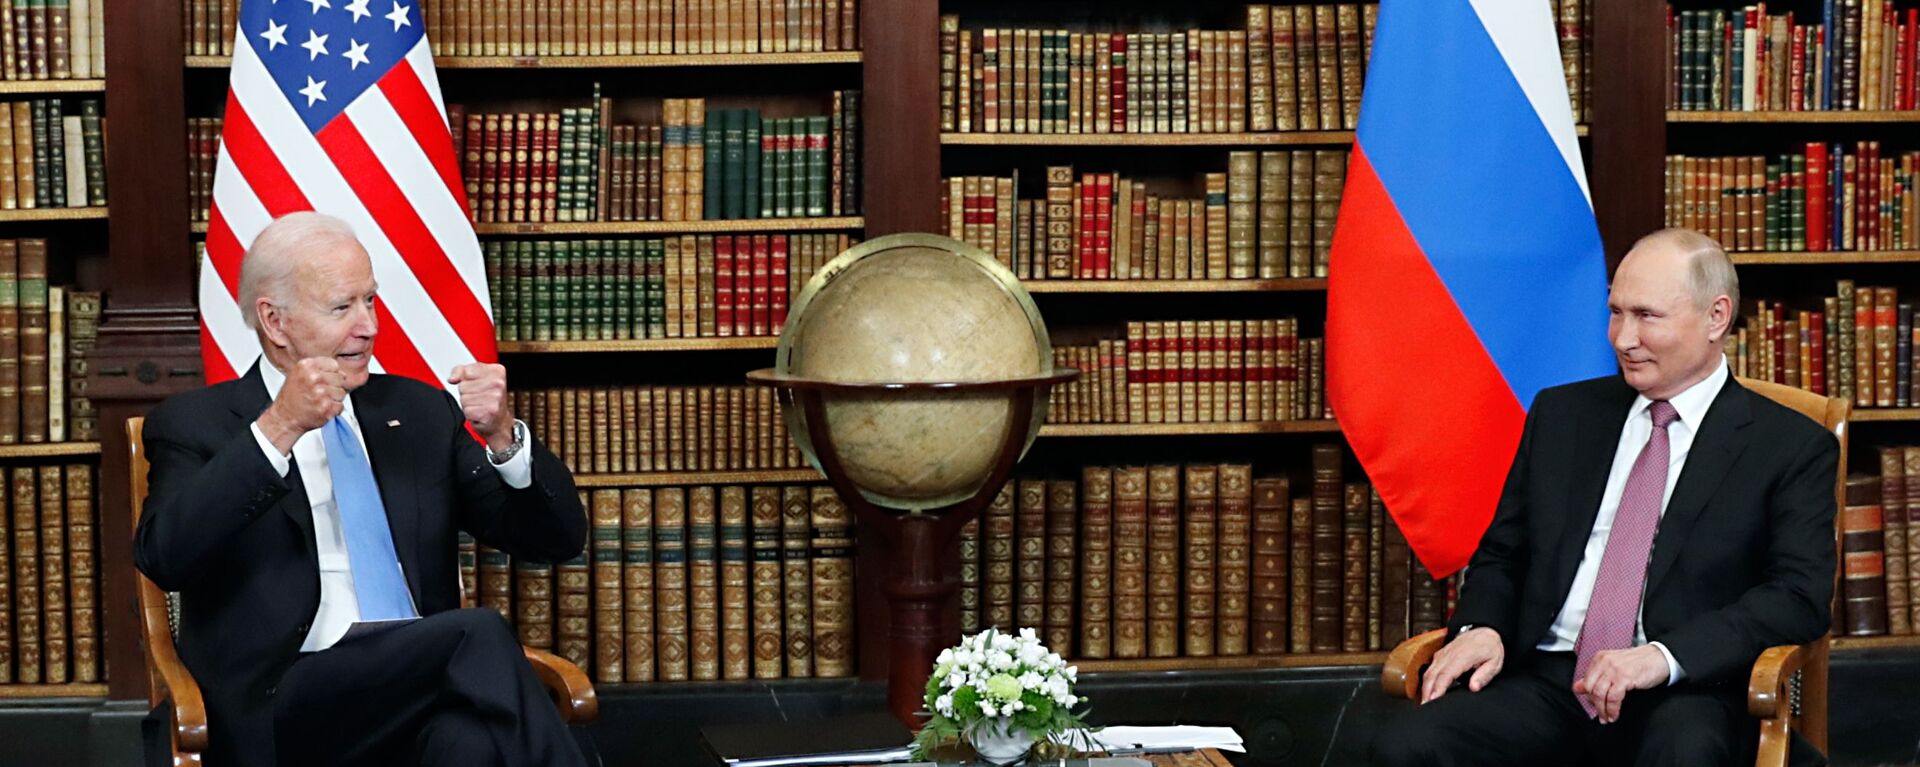 Президент РФ Владимир Путин и президент США Джо Байден  во время встречи в Женеве на вилле Ла Гранж - Sputnik Молдова, 1920, 29.12.2021